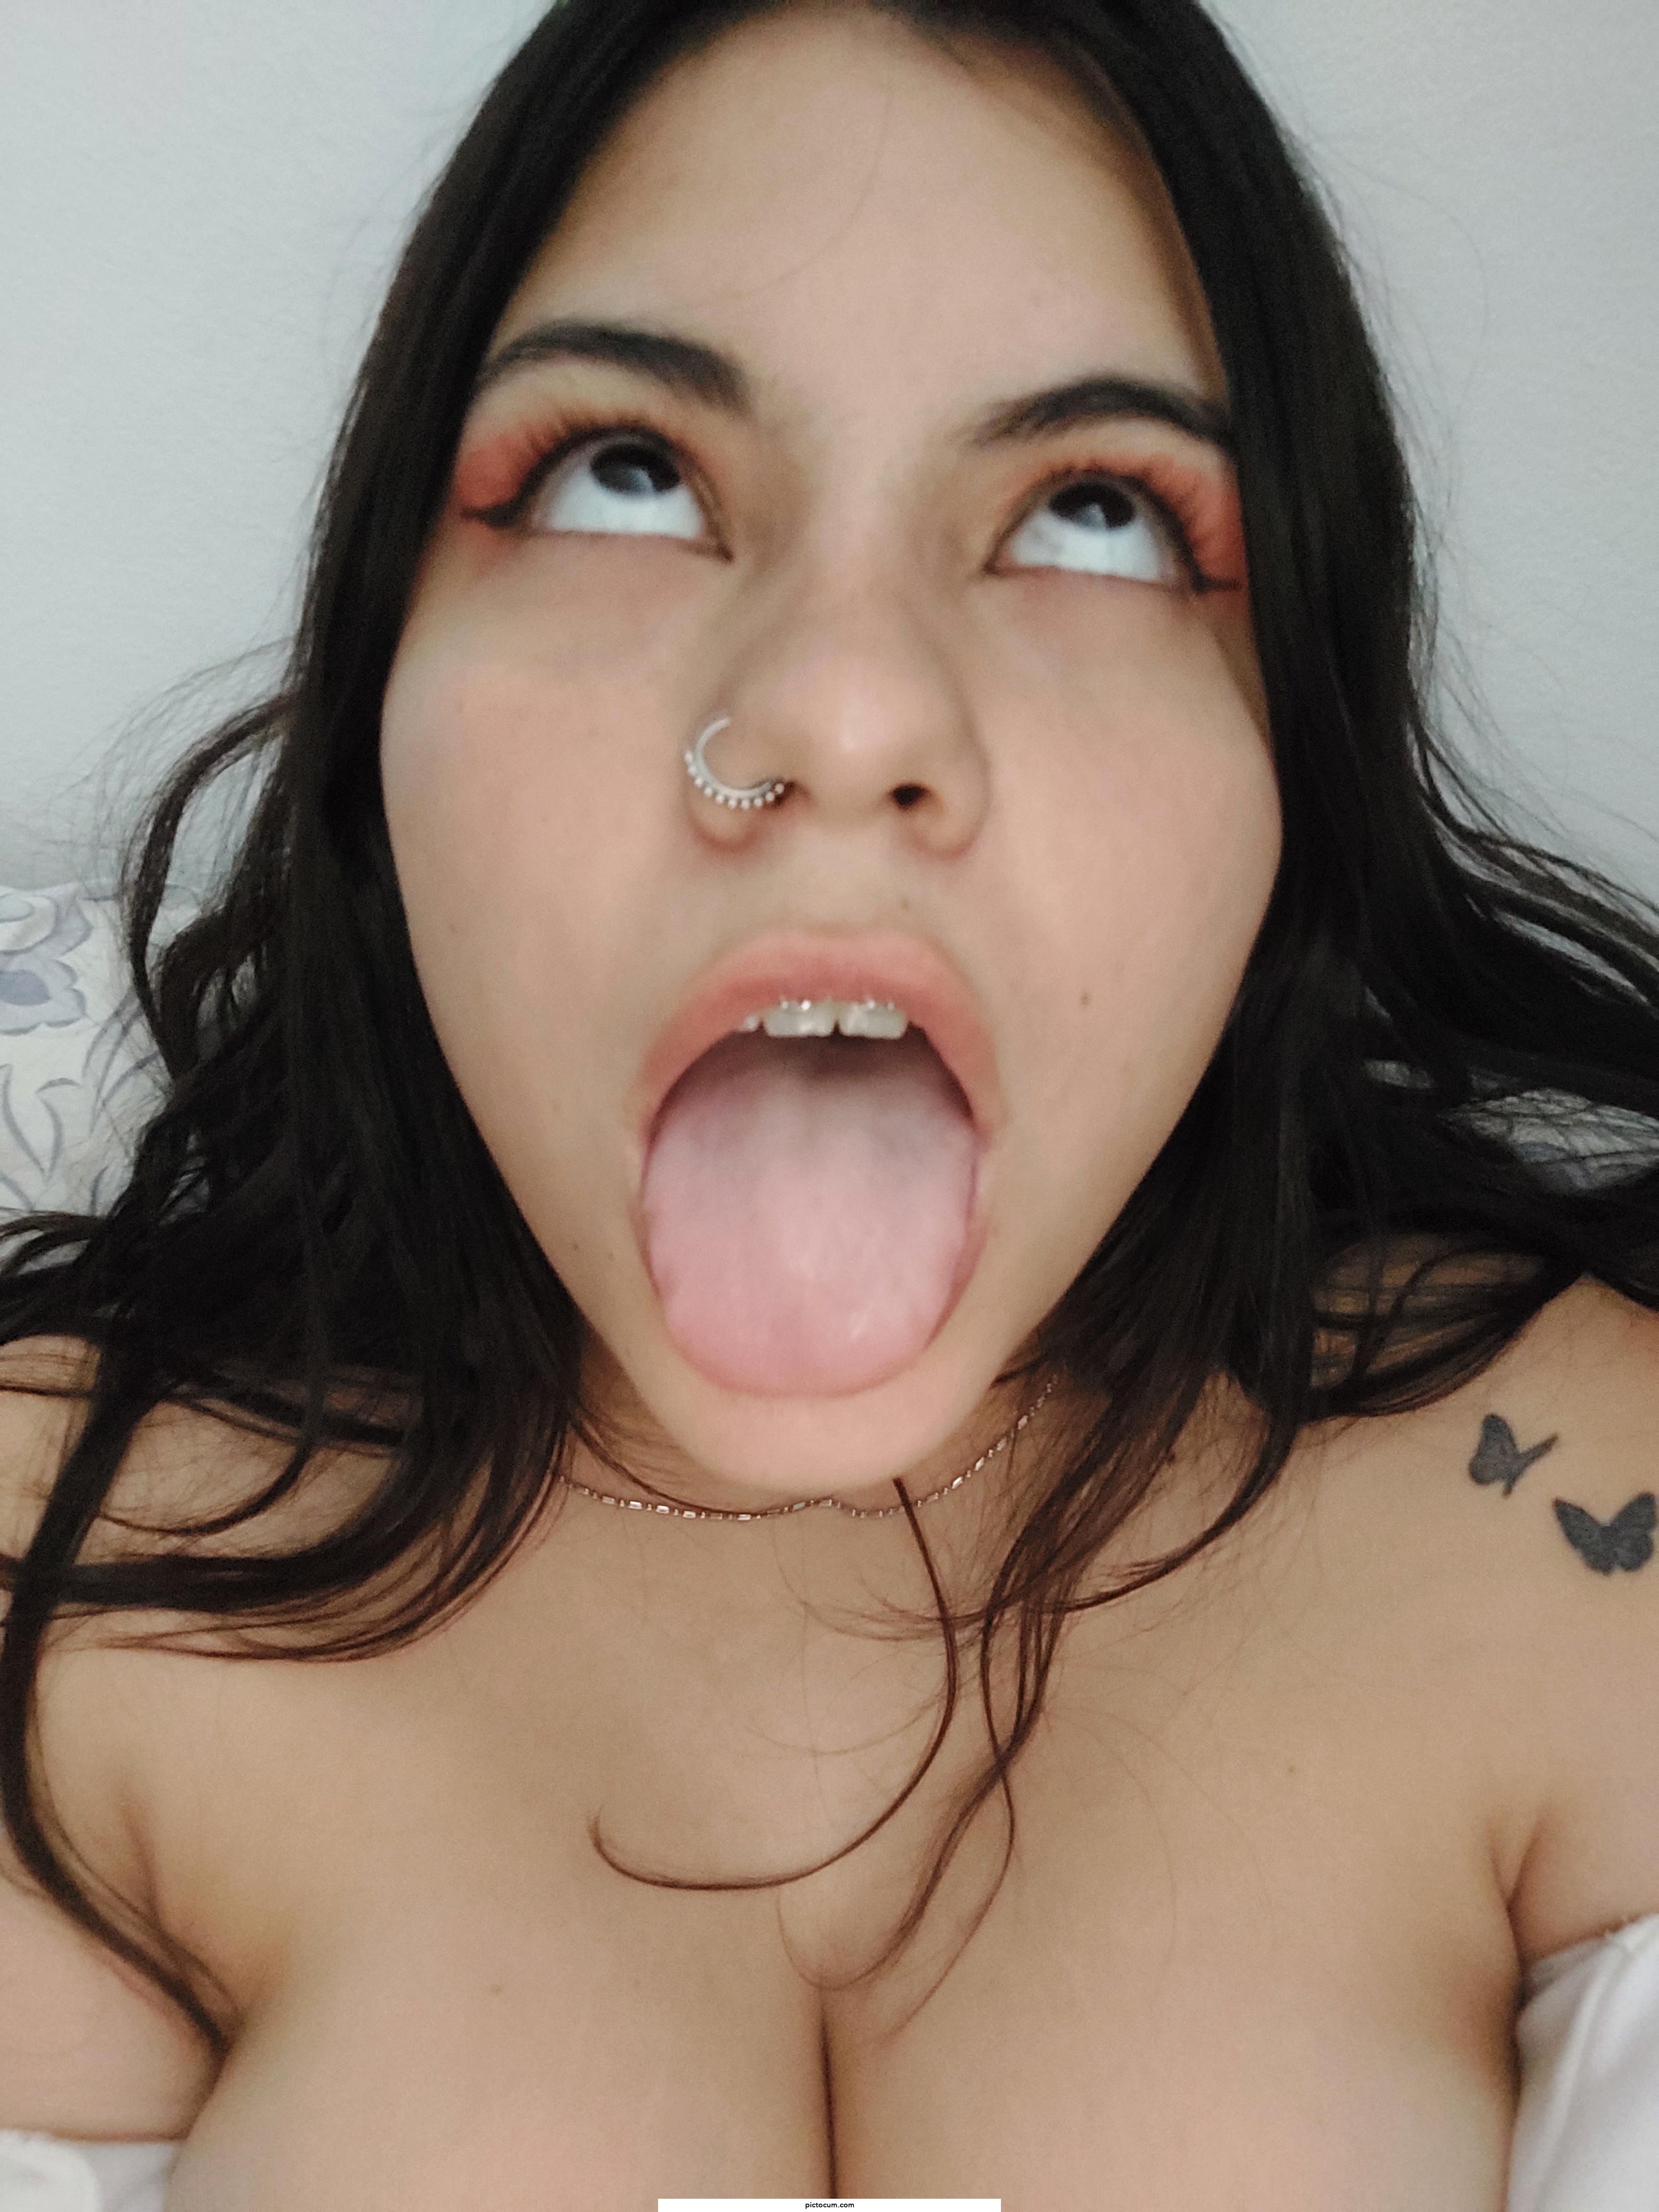 Wanna cum in my mouth babe?🤭